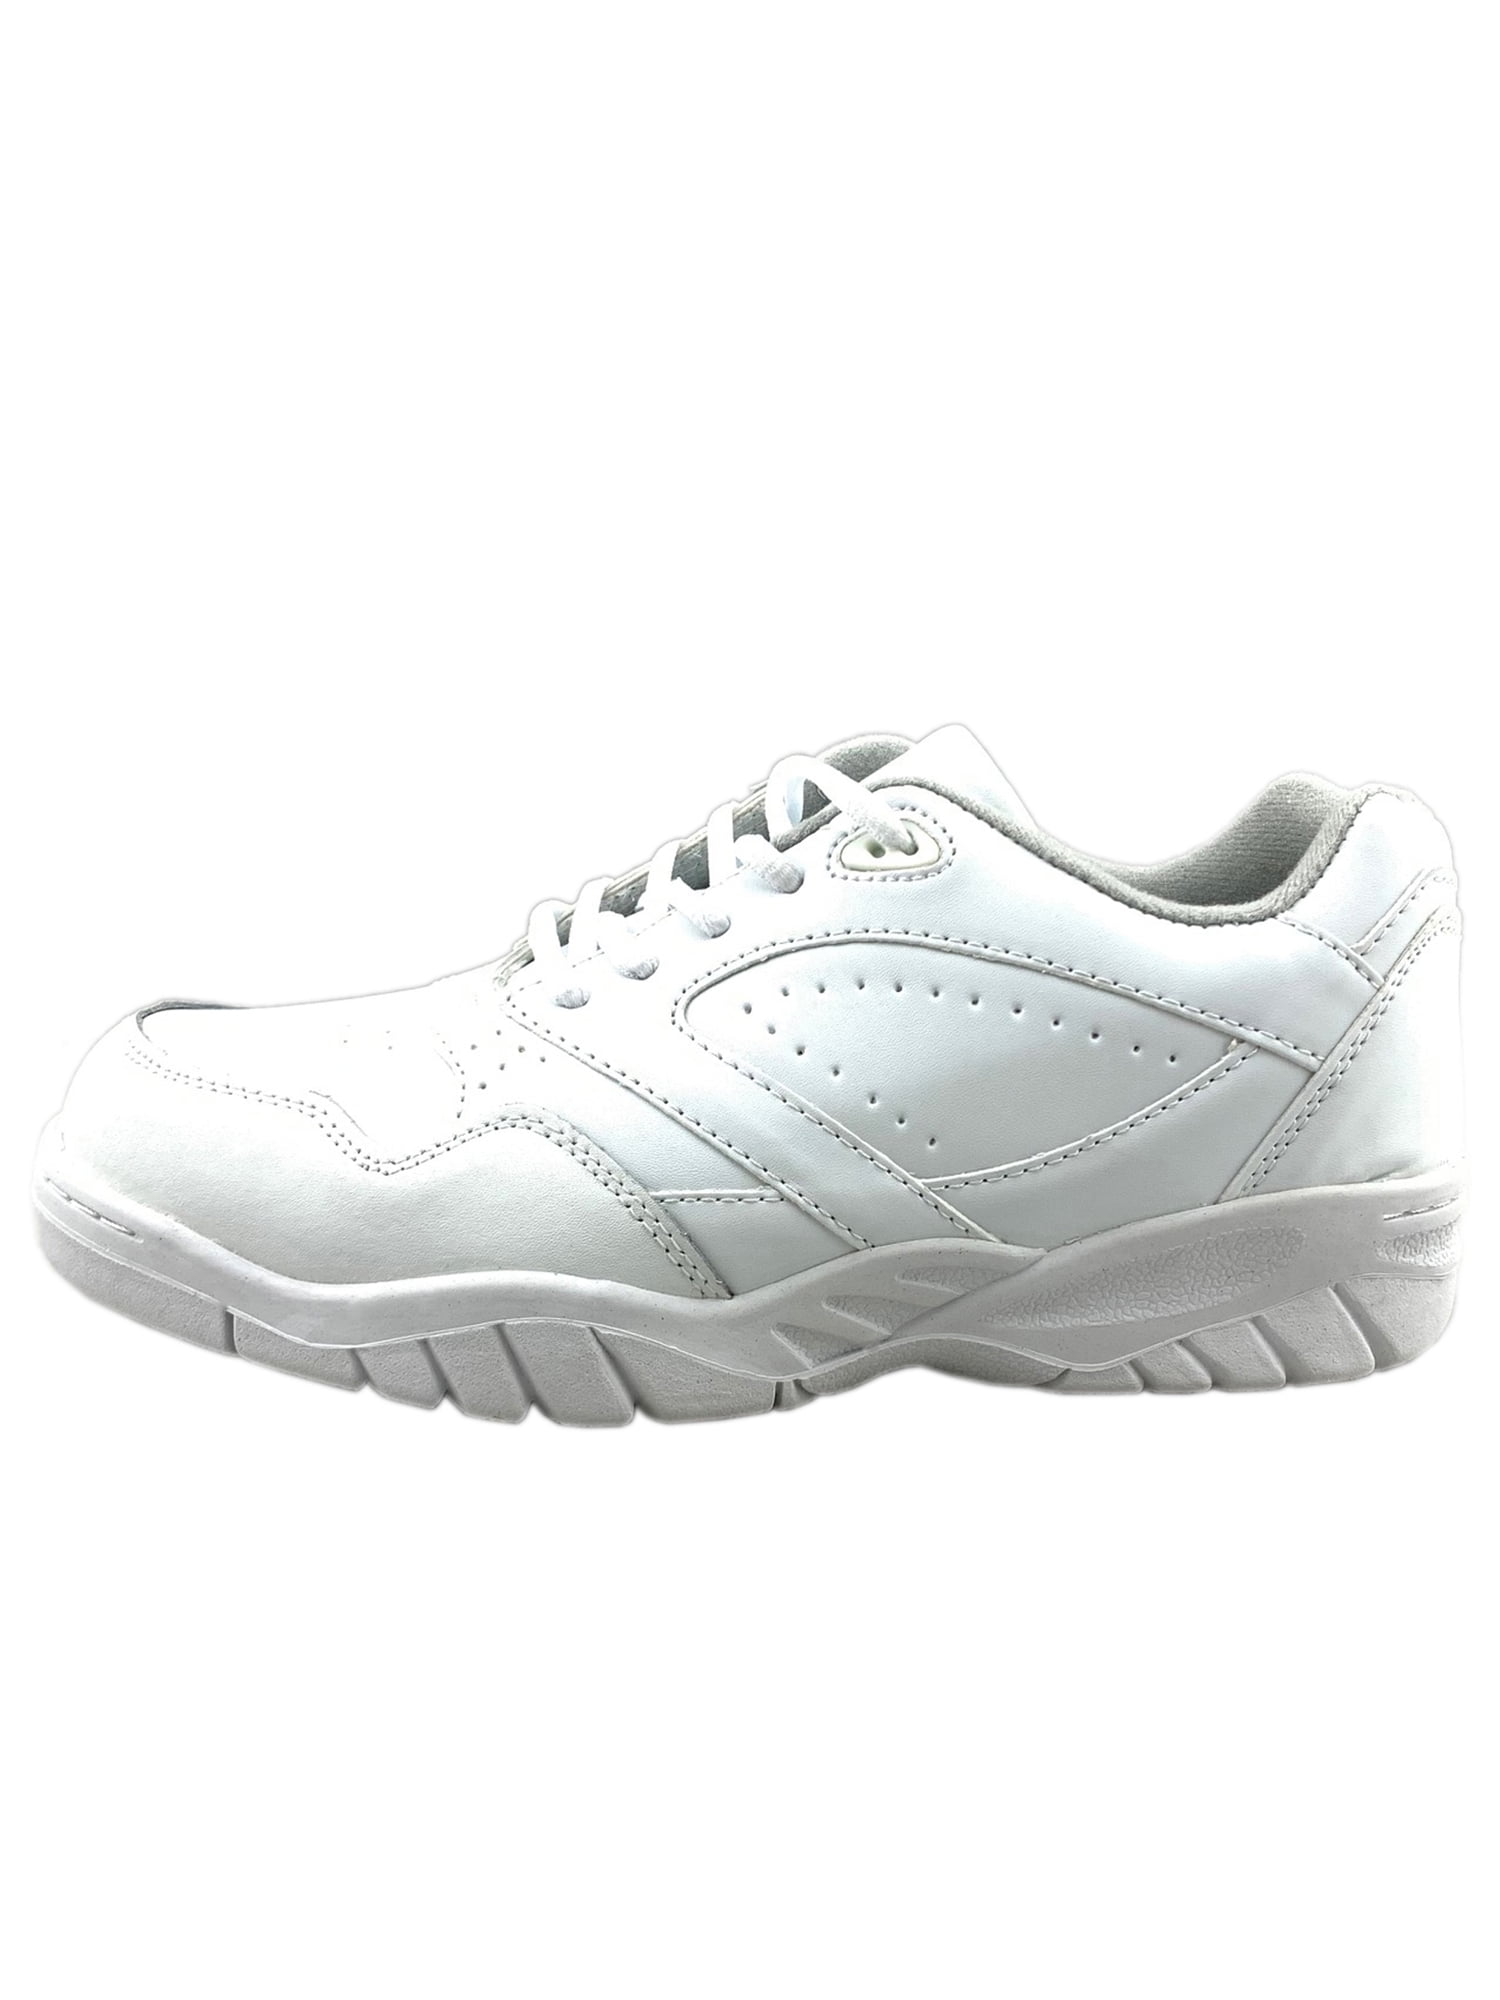 all white walmart shoes